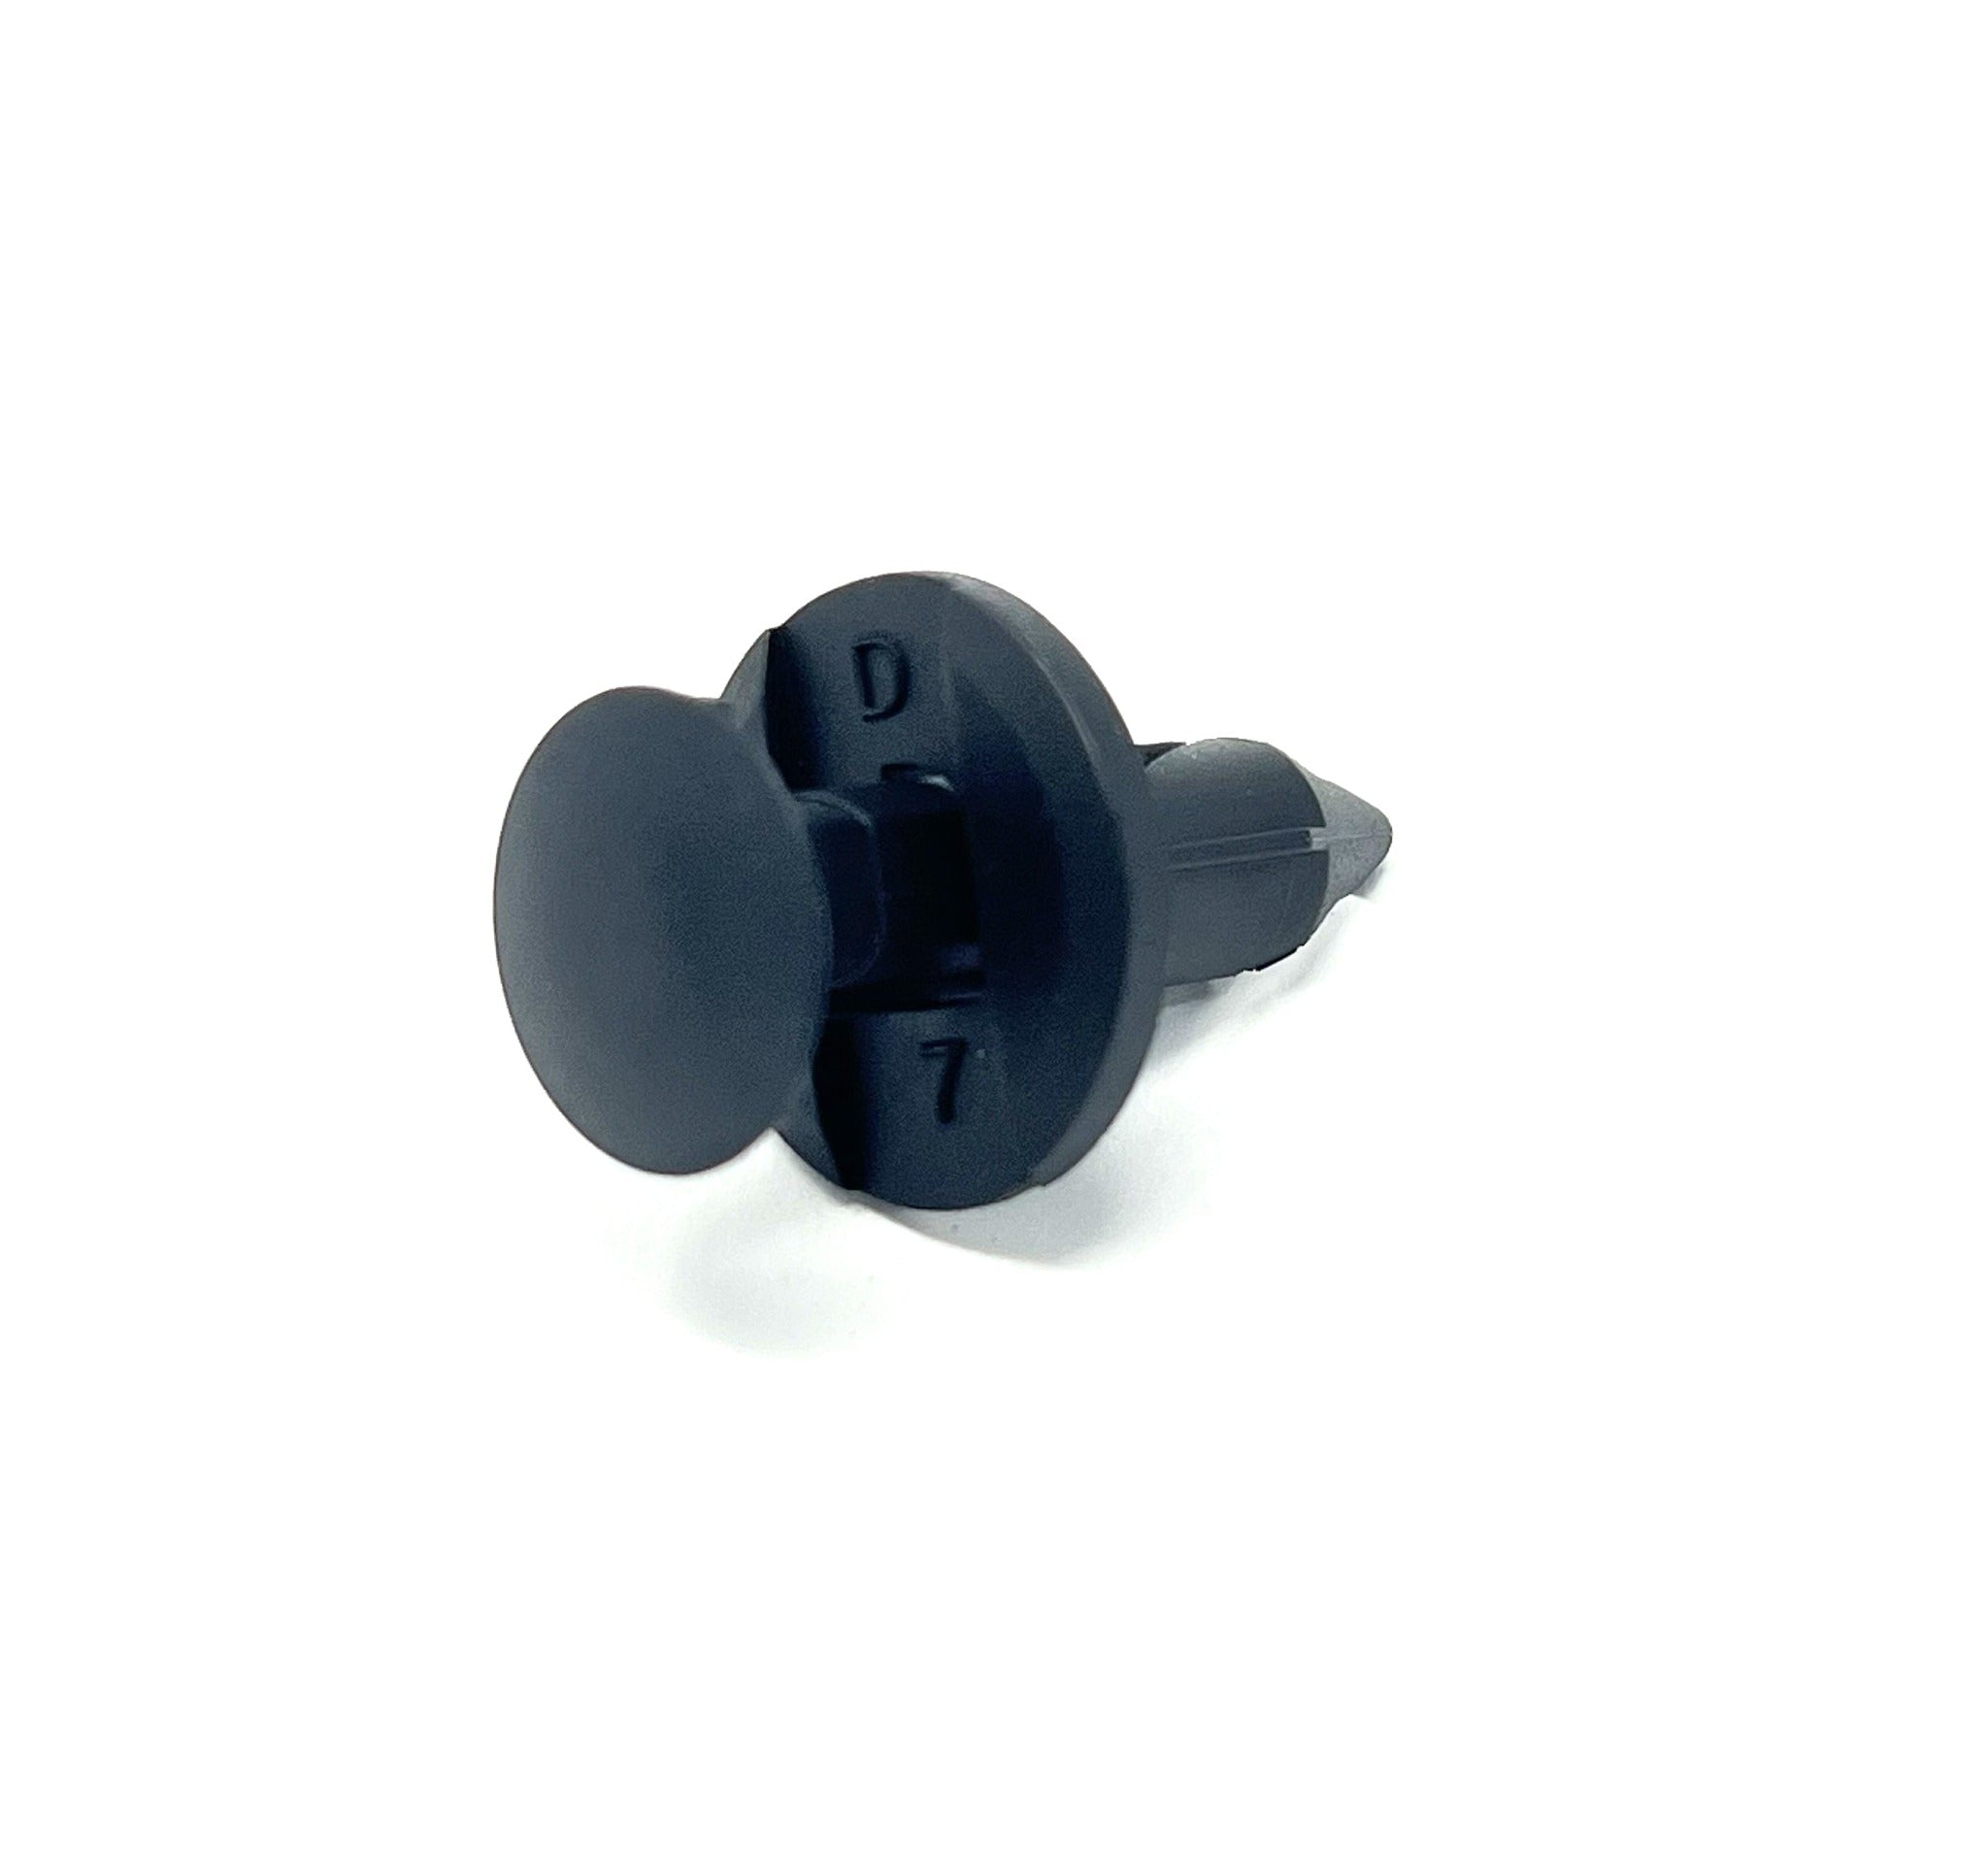 Black Nylon Push Type Retainer Head Diameter 20mm, Stem Length 20mm, Fits Into 8mm Hole (Pack of 25)